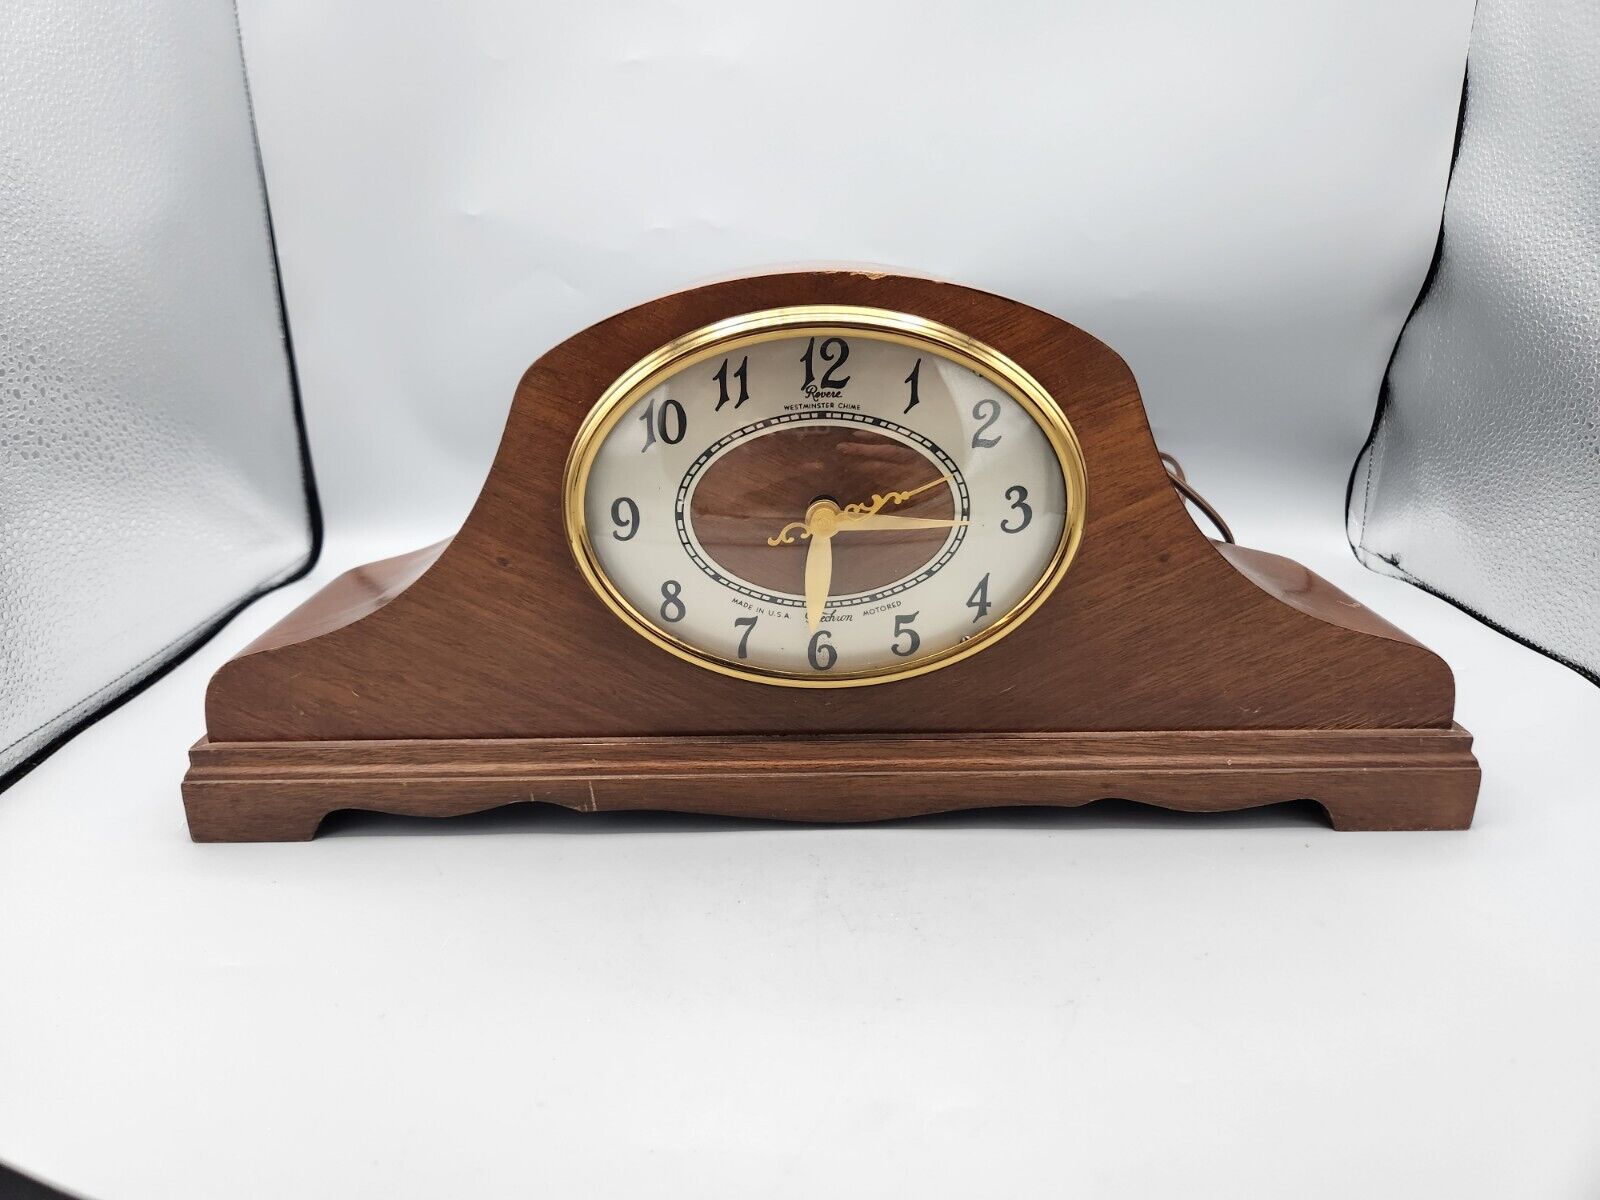 Revere West Mister Chime Mantle Clock Model R -913. Ohio USA